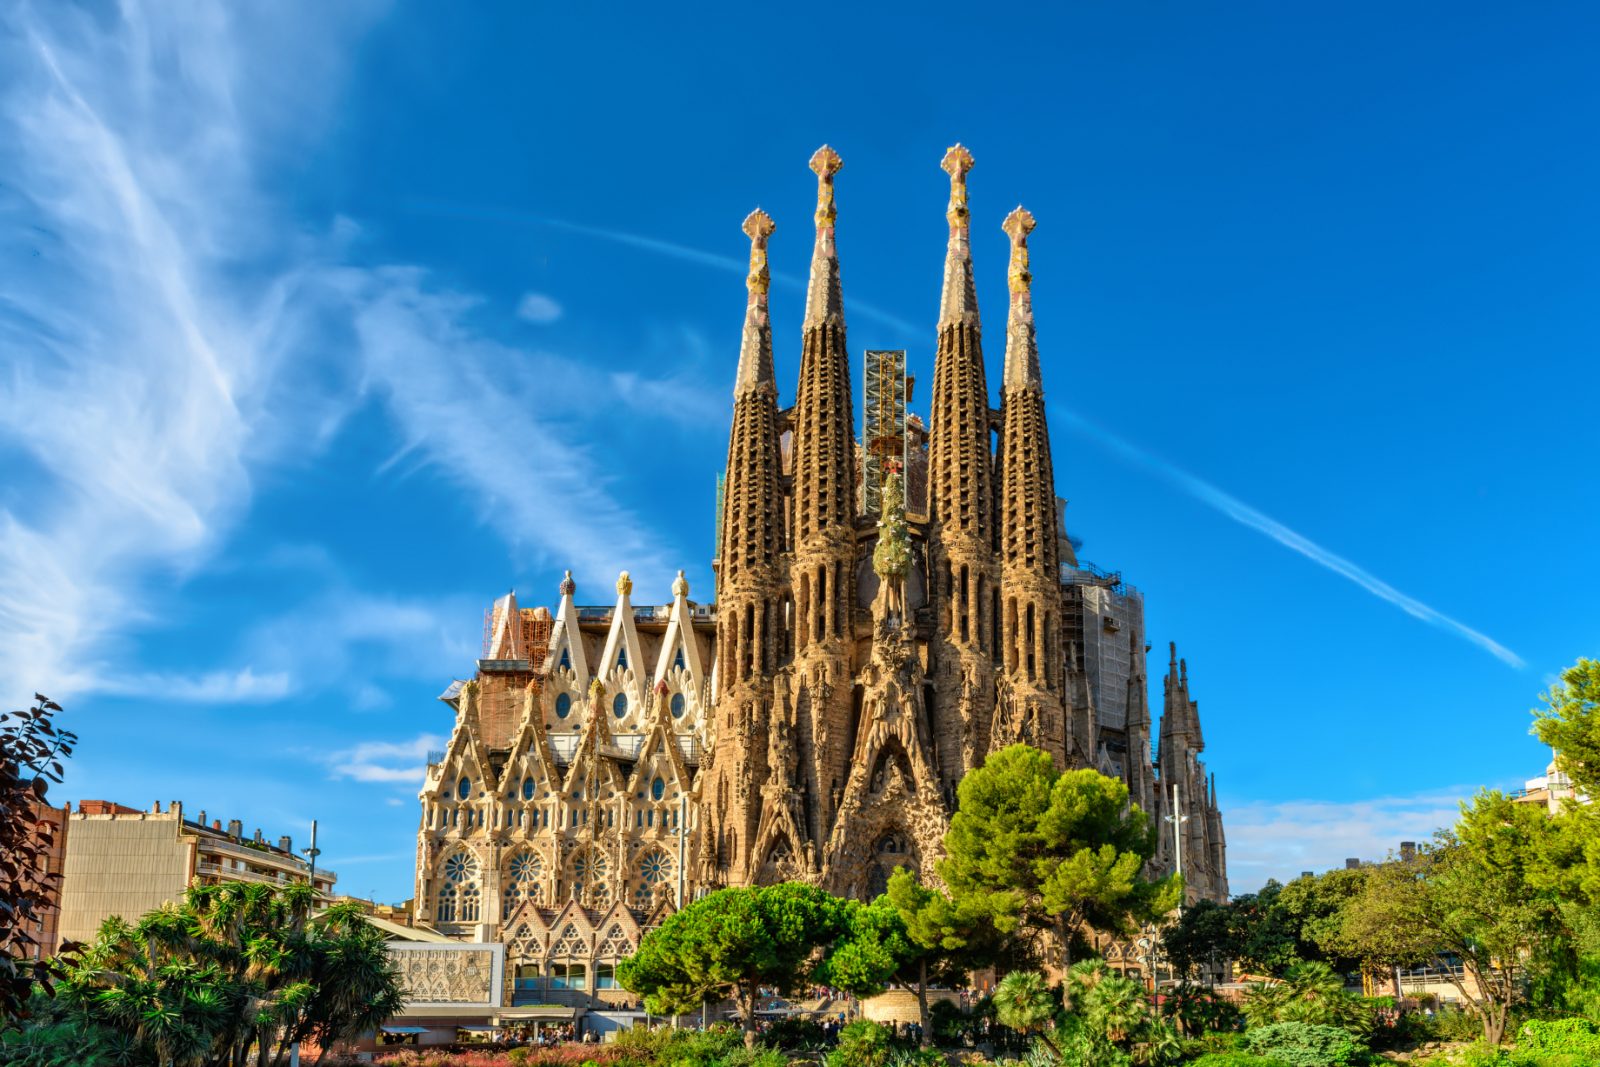 Second Largest Cities La Sagrada Familia in Barcelona, Spain